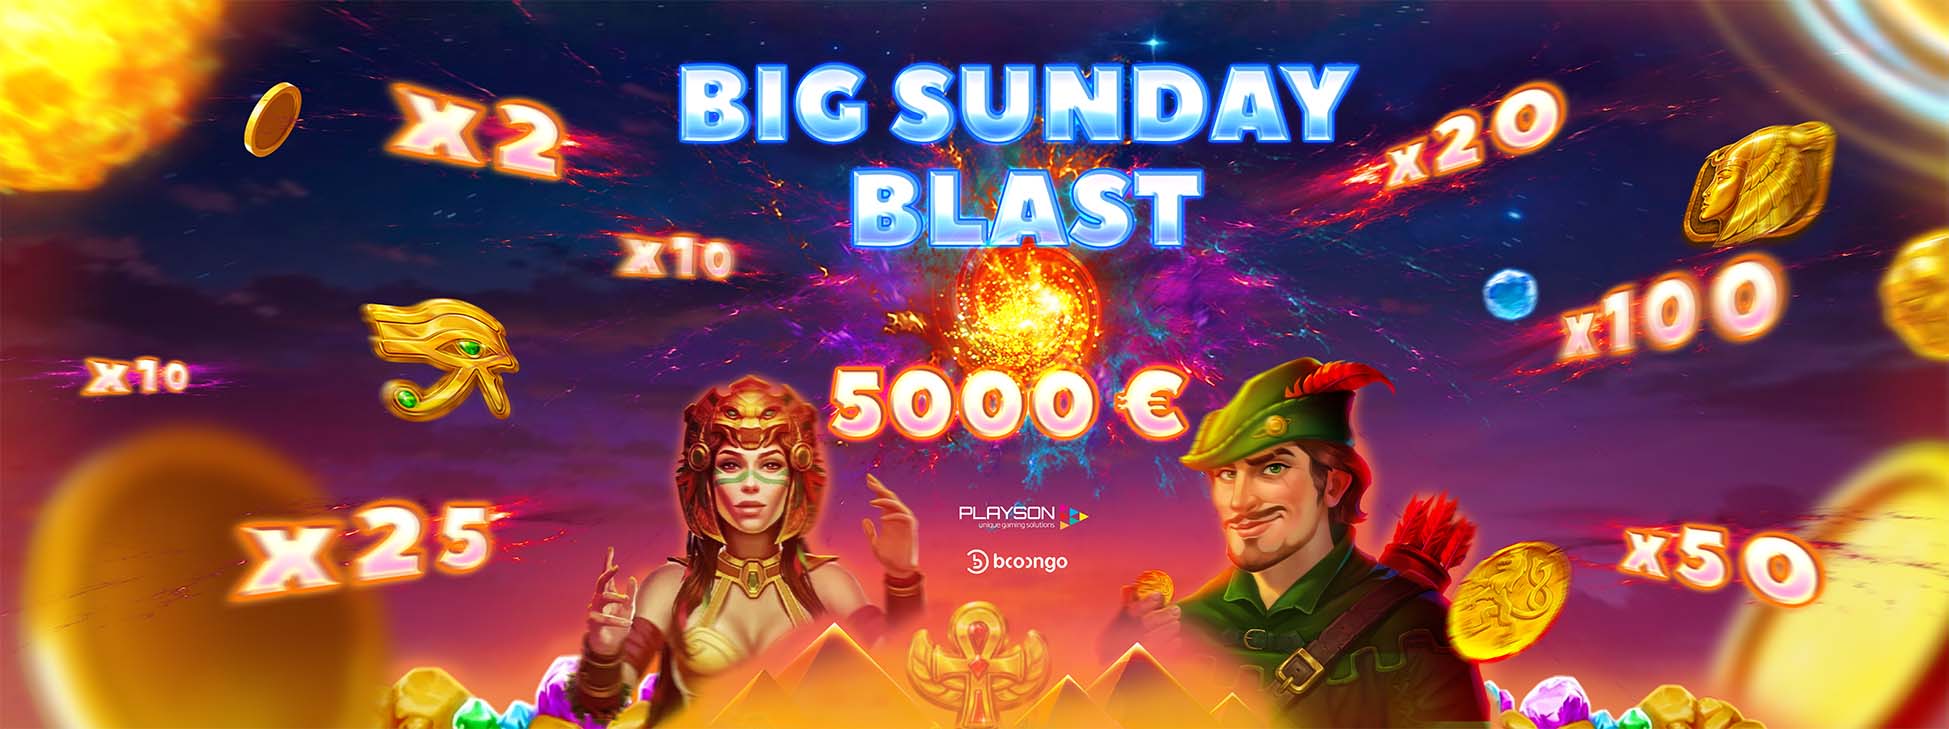 Redgenn Big Sunday Blast